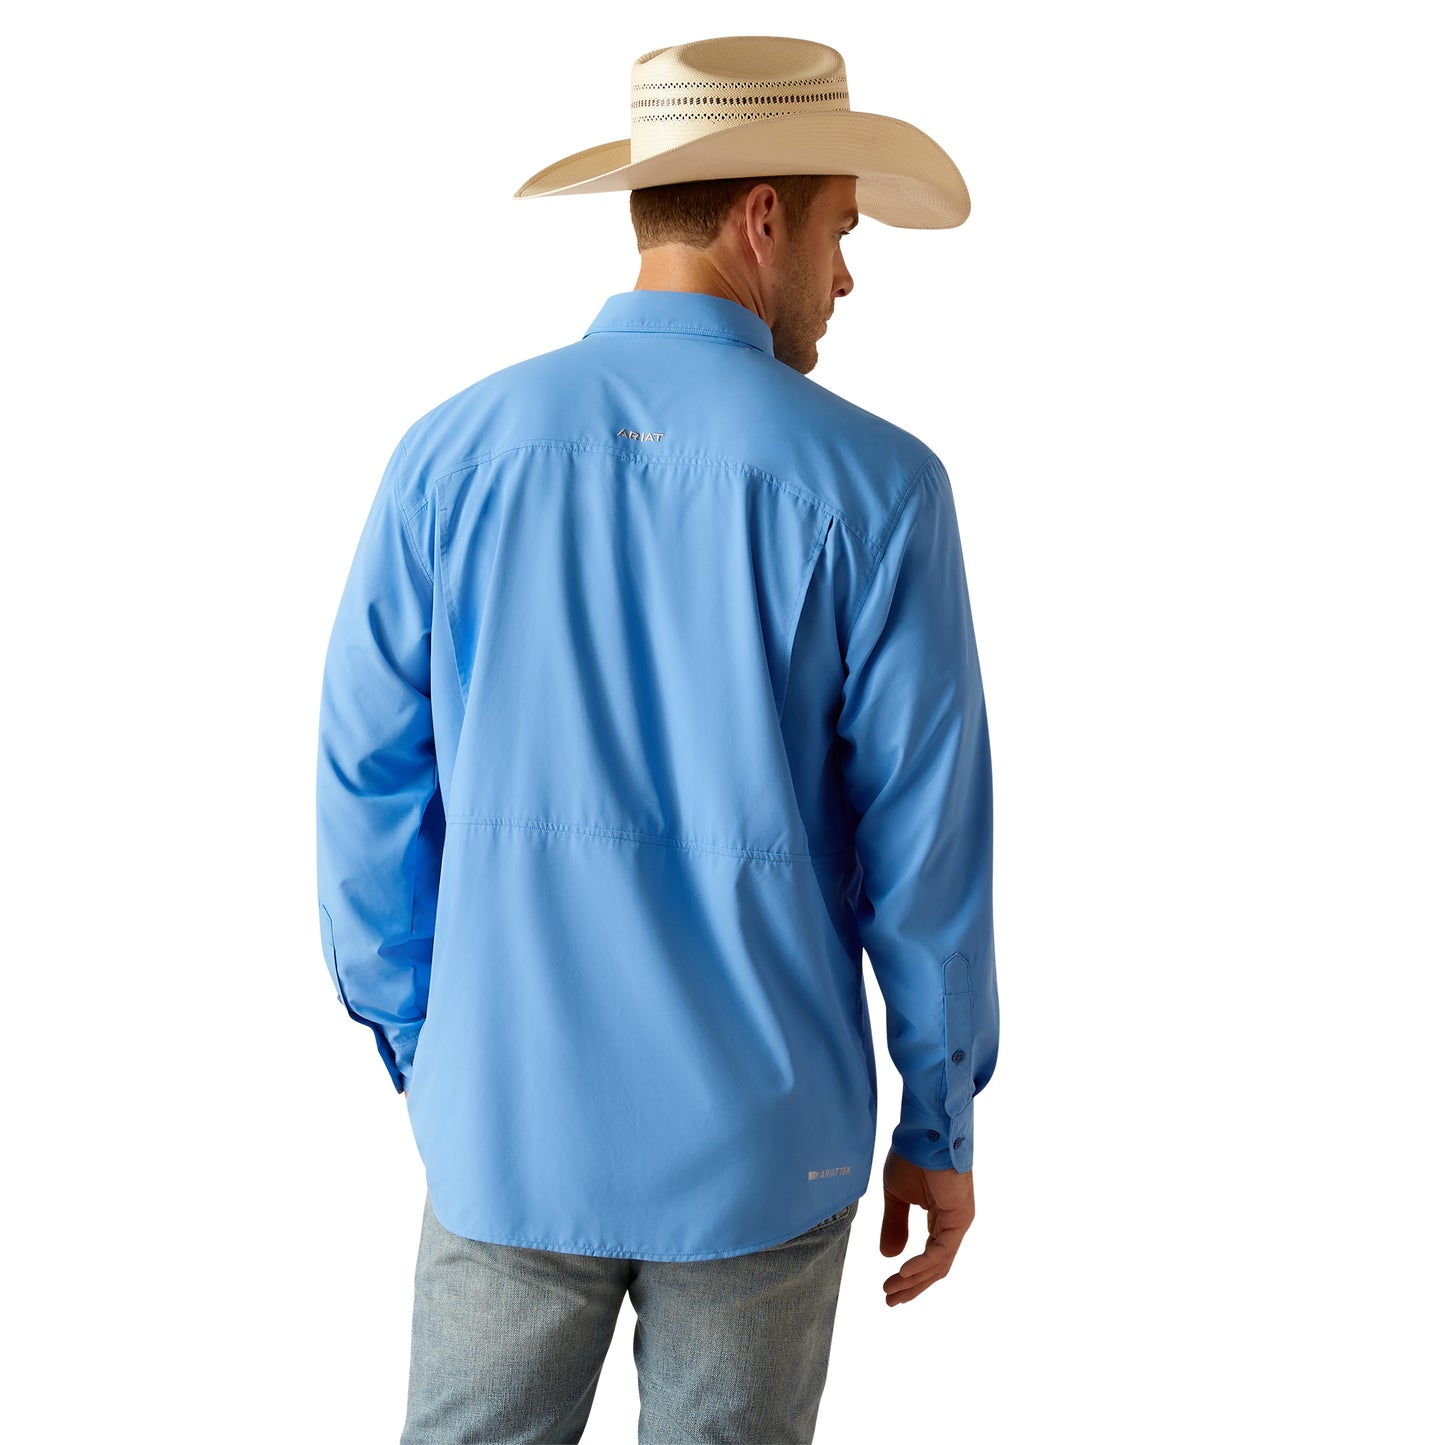 Ariat Men's VentTEK Outbound Marina Blue Classic Fit Shirt 10049013